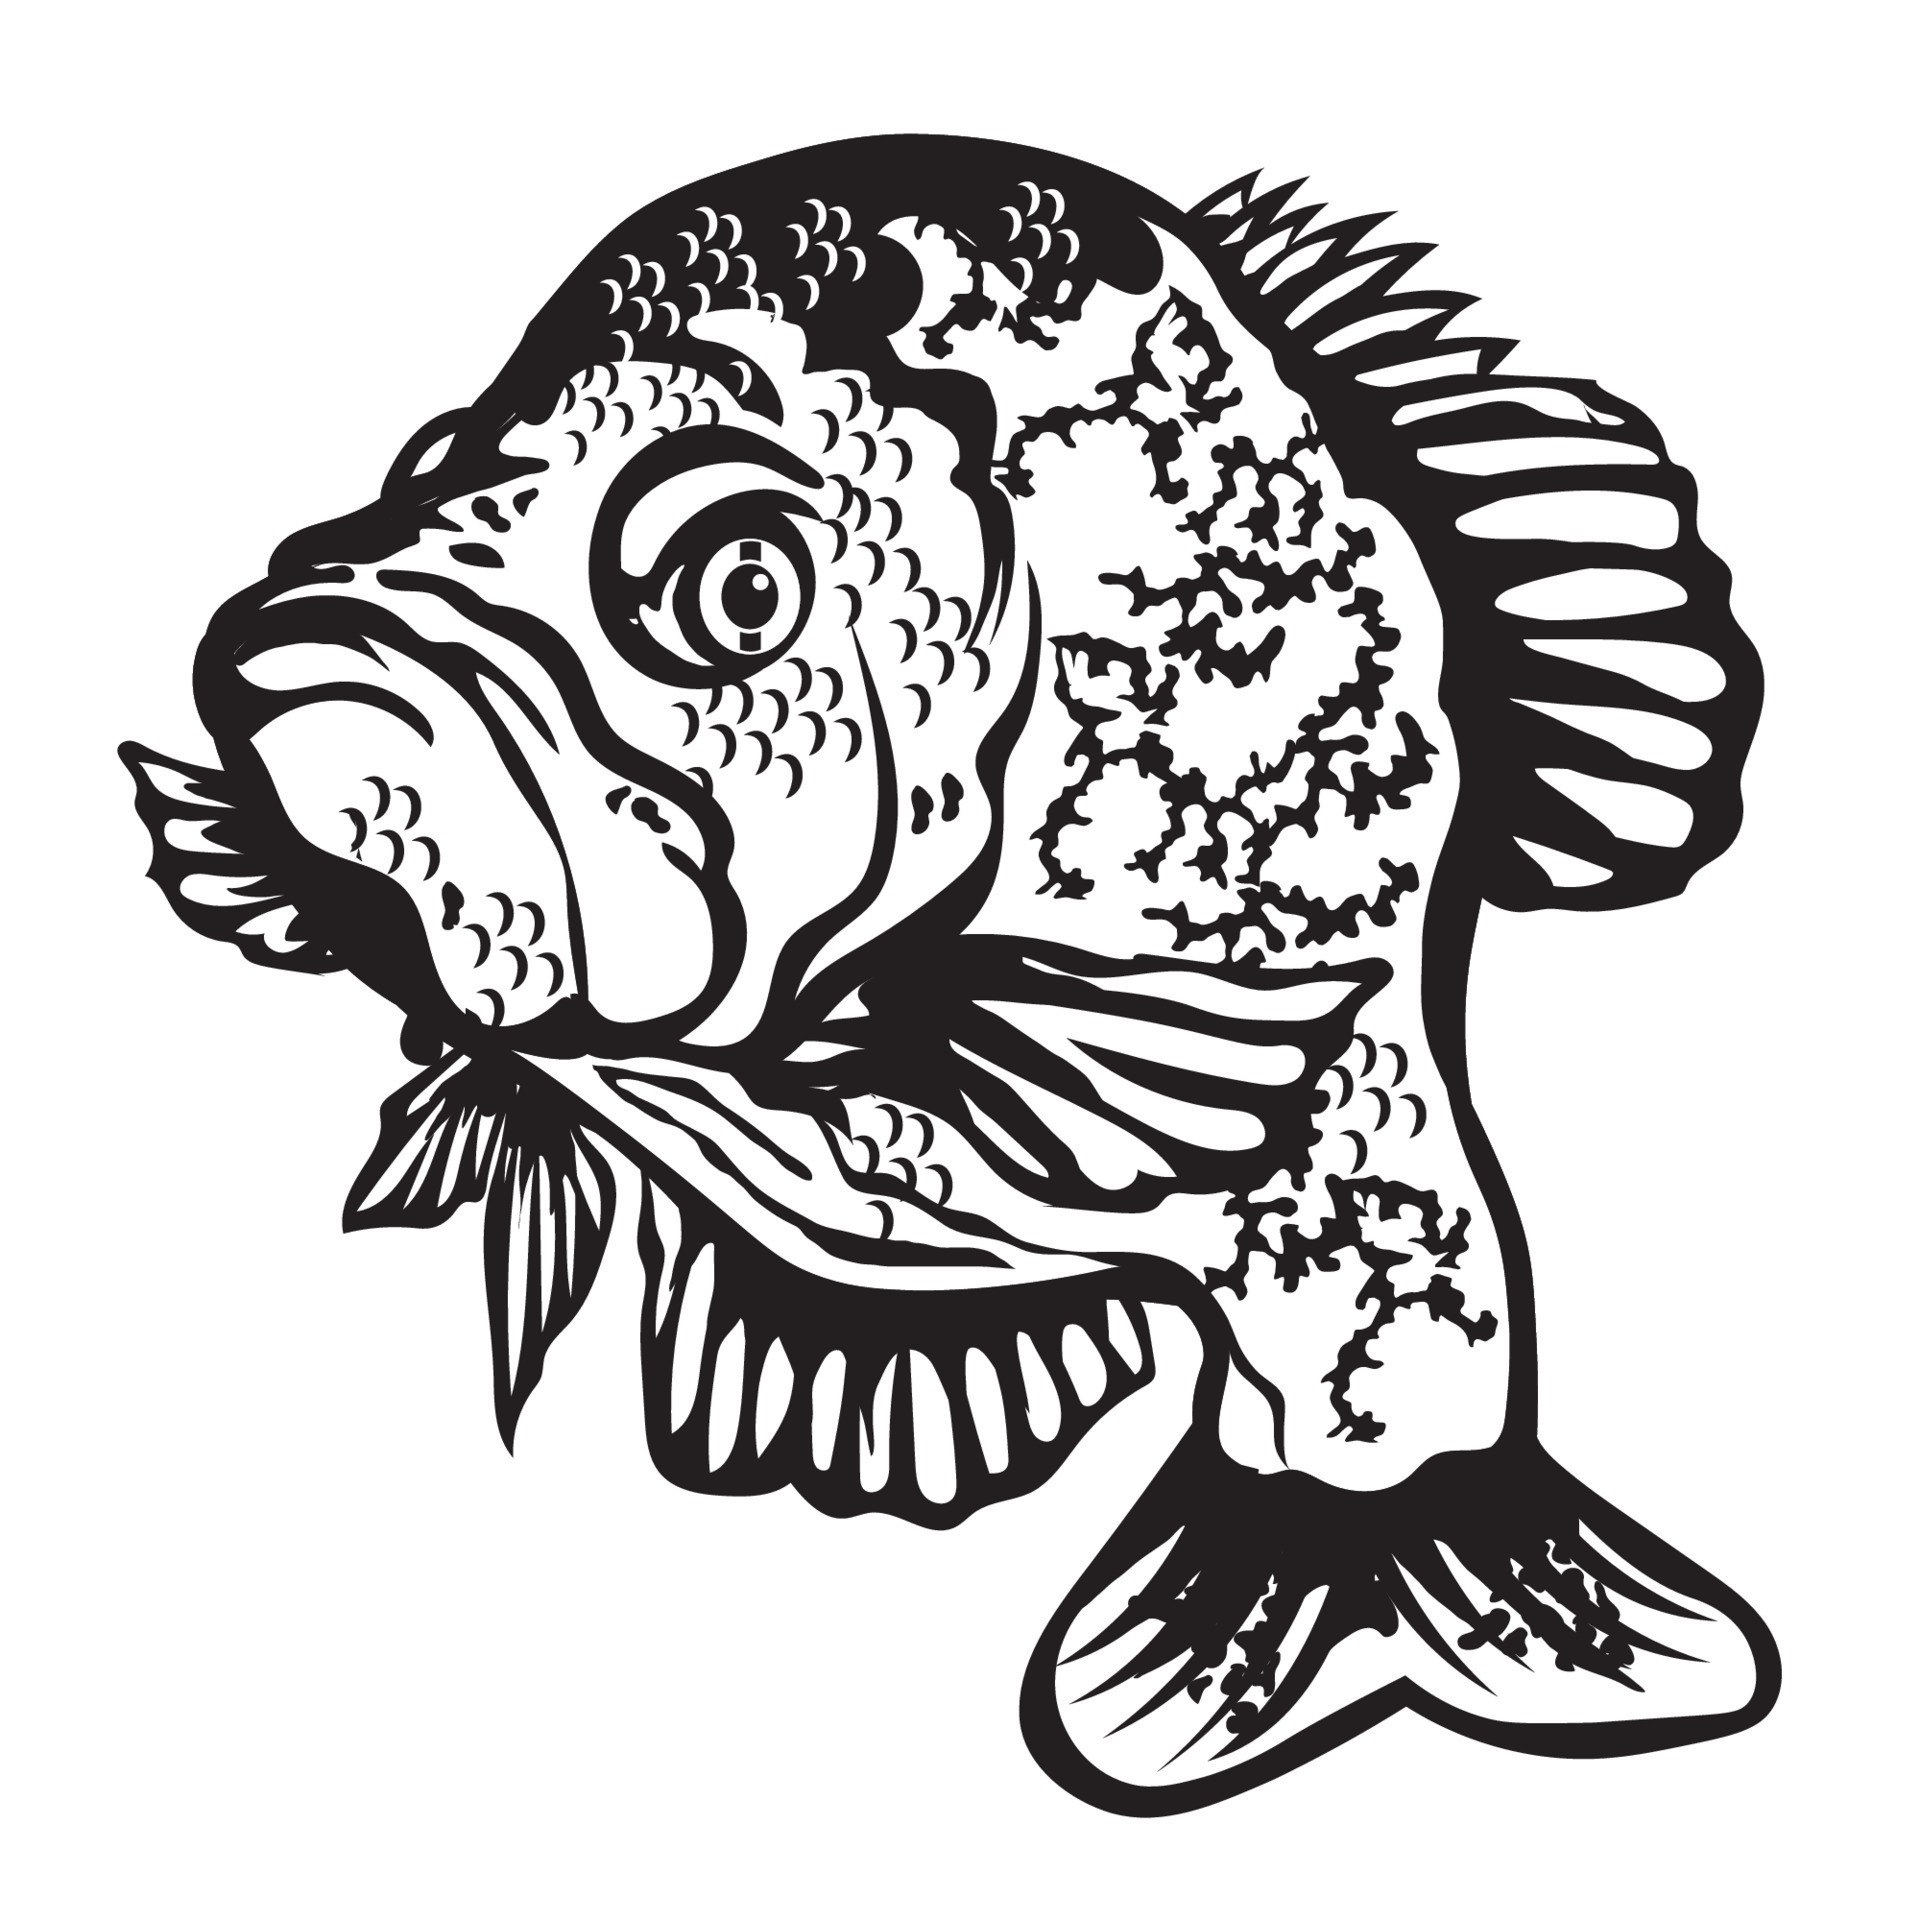 Crappie fish vector illustration, good for tshirt, fishing club